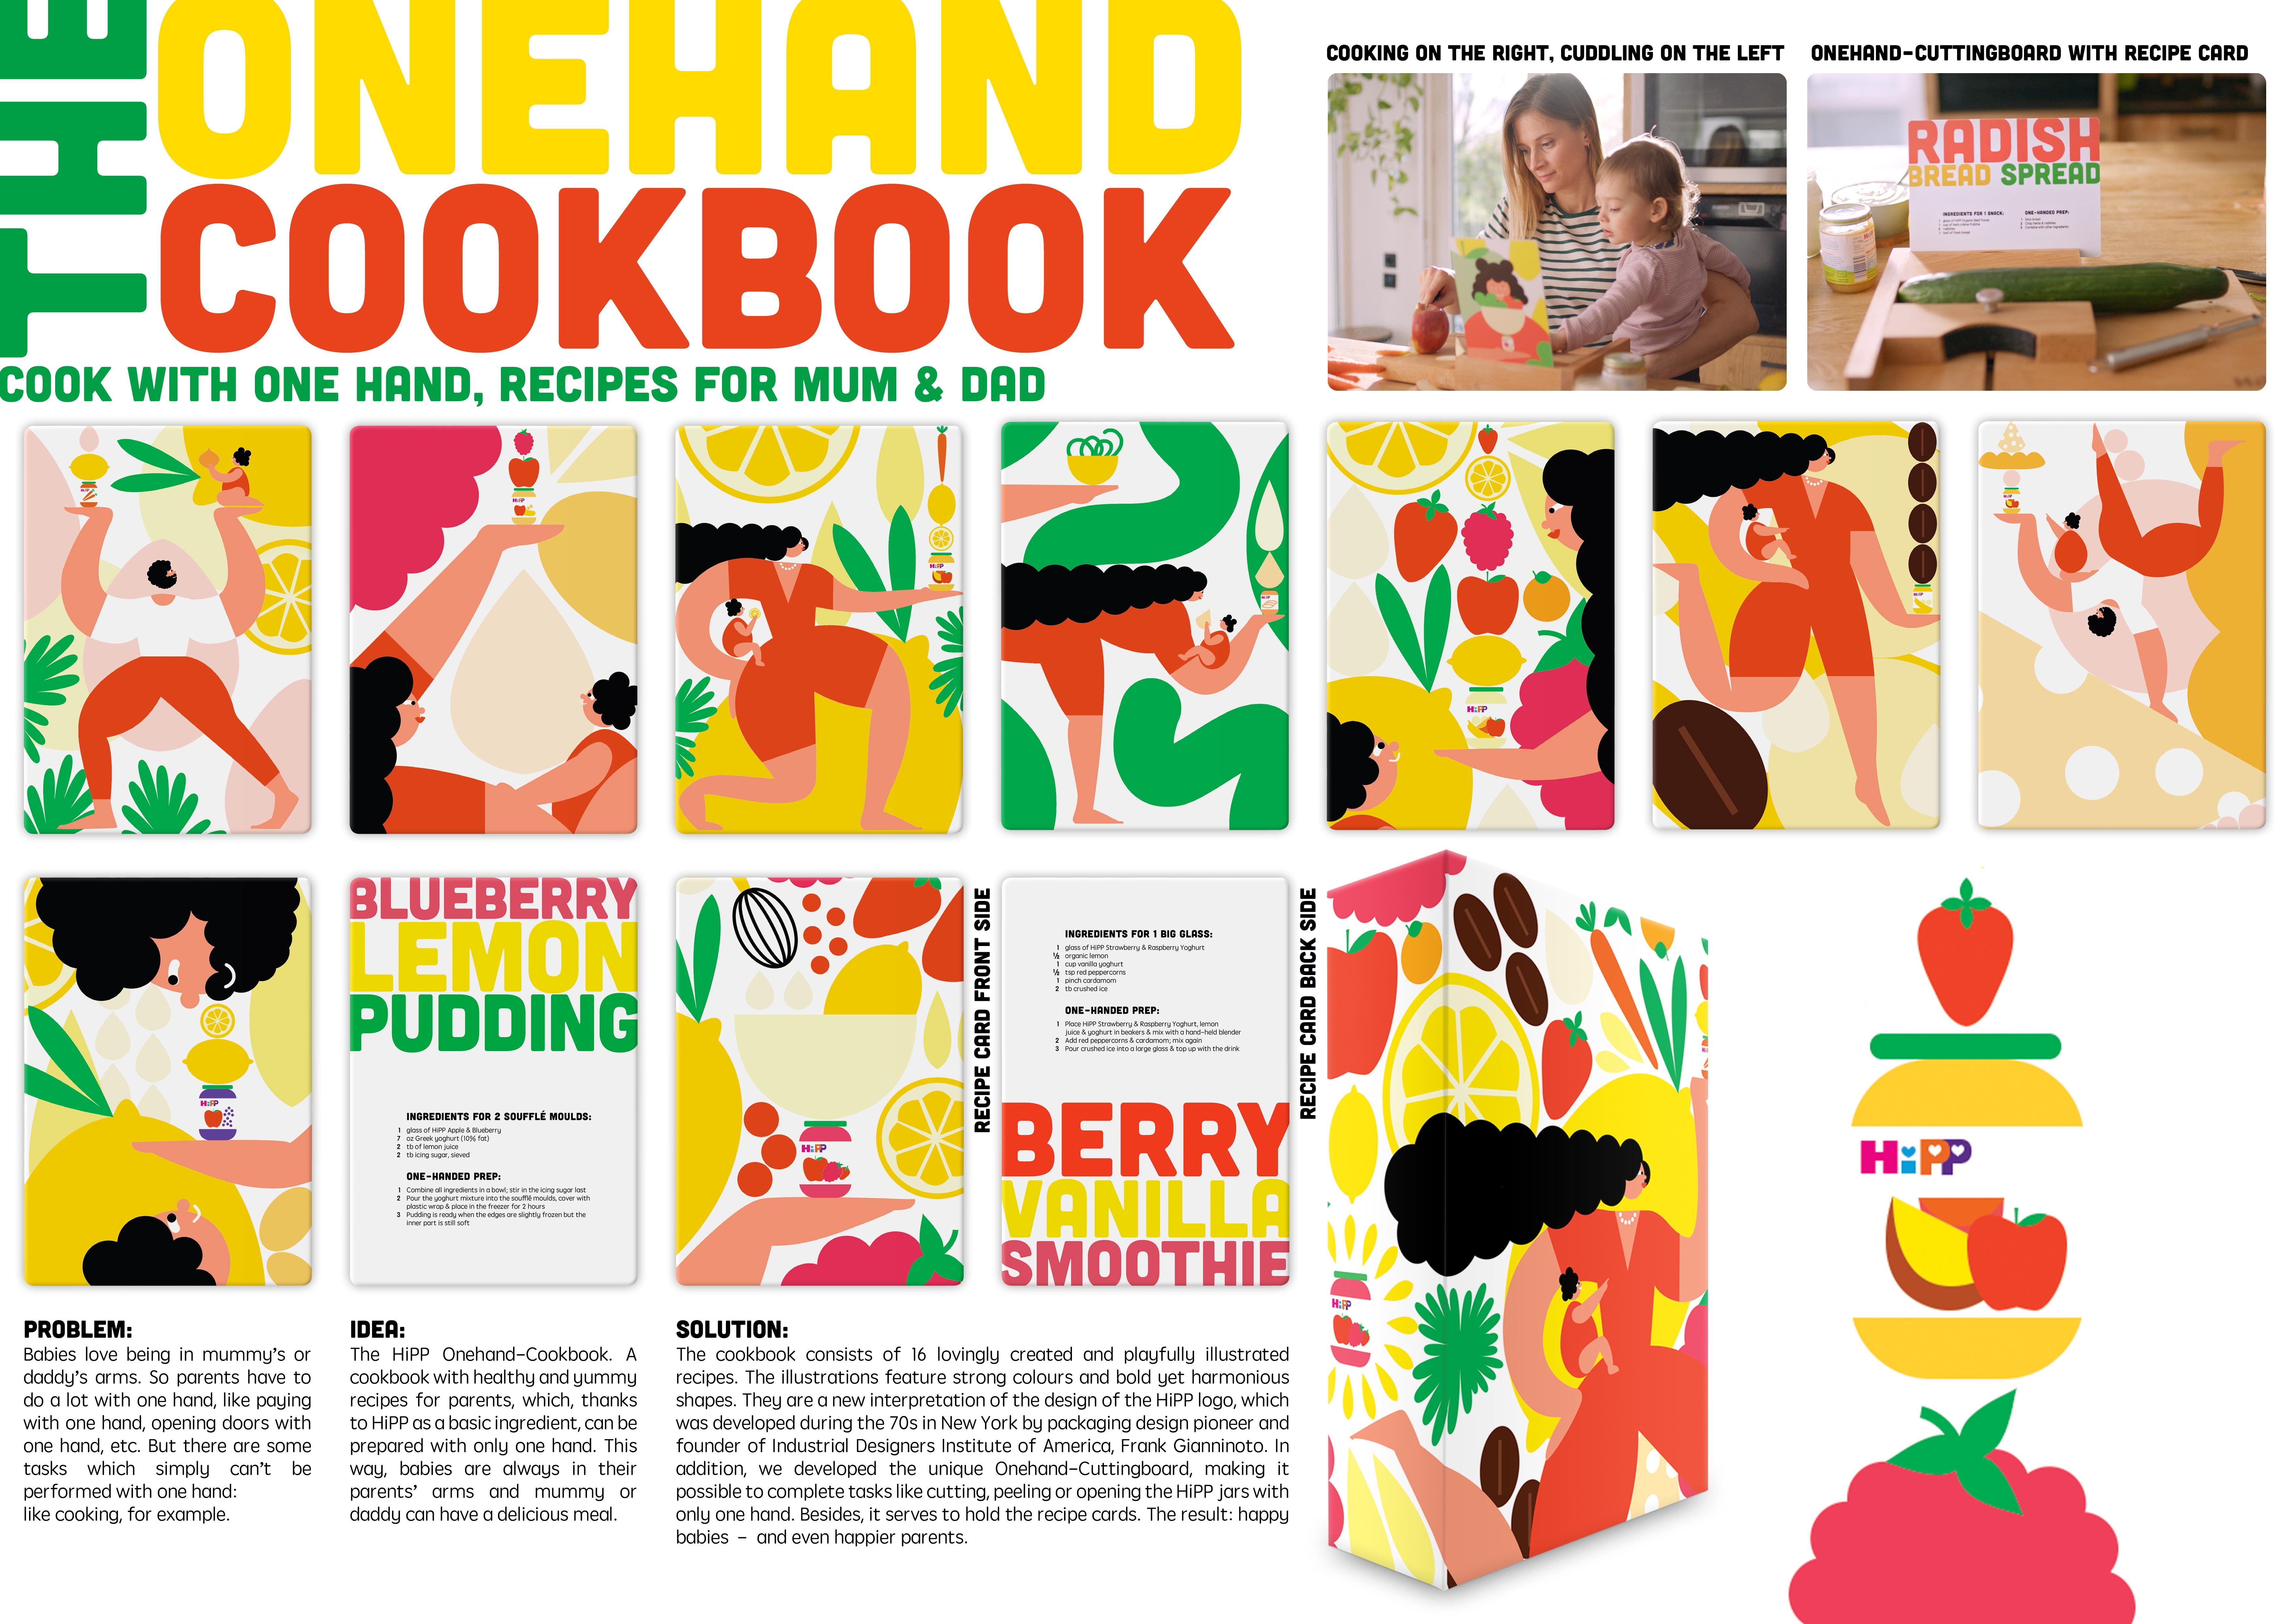 The HiPP Onehand-Cookbook